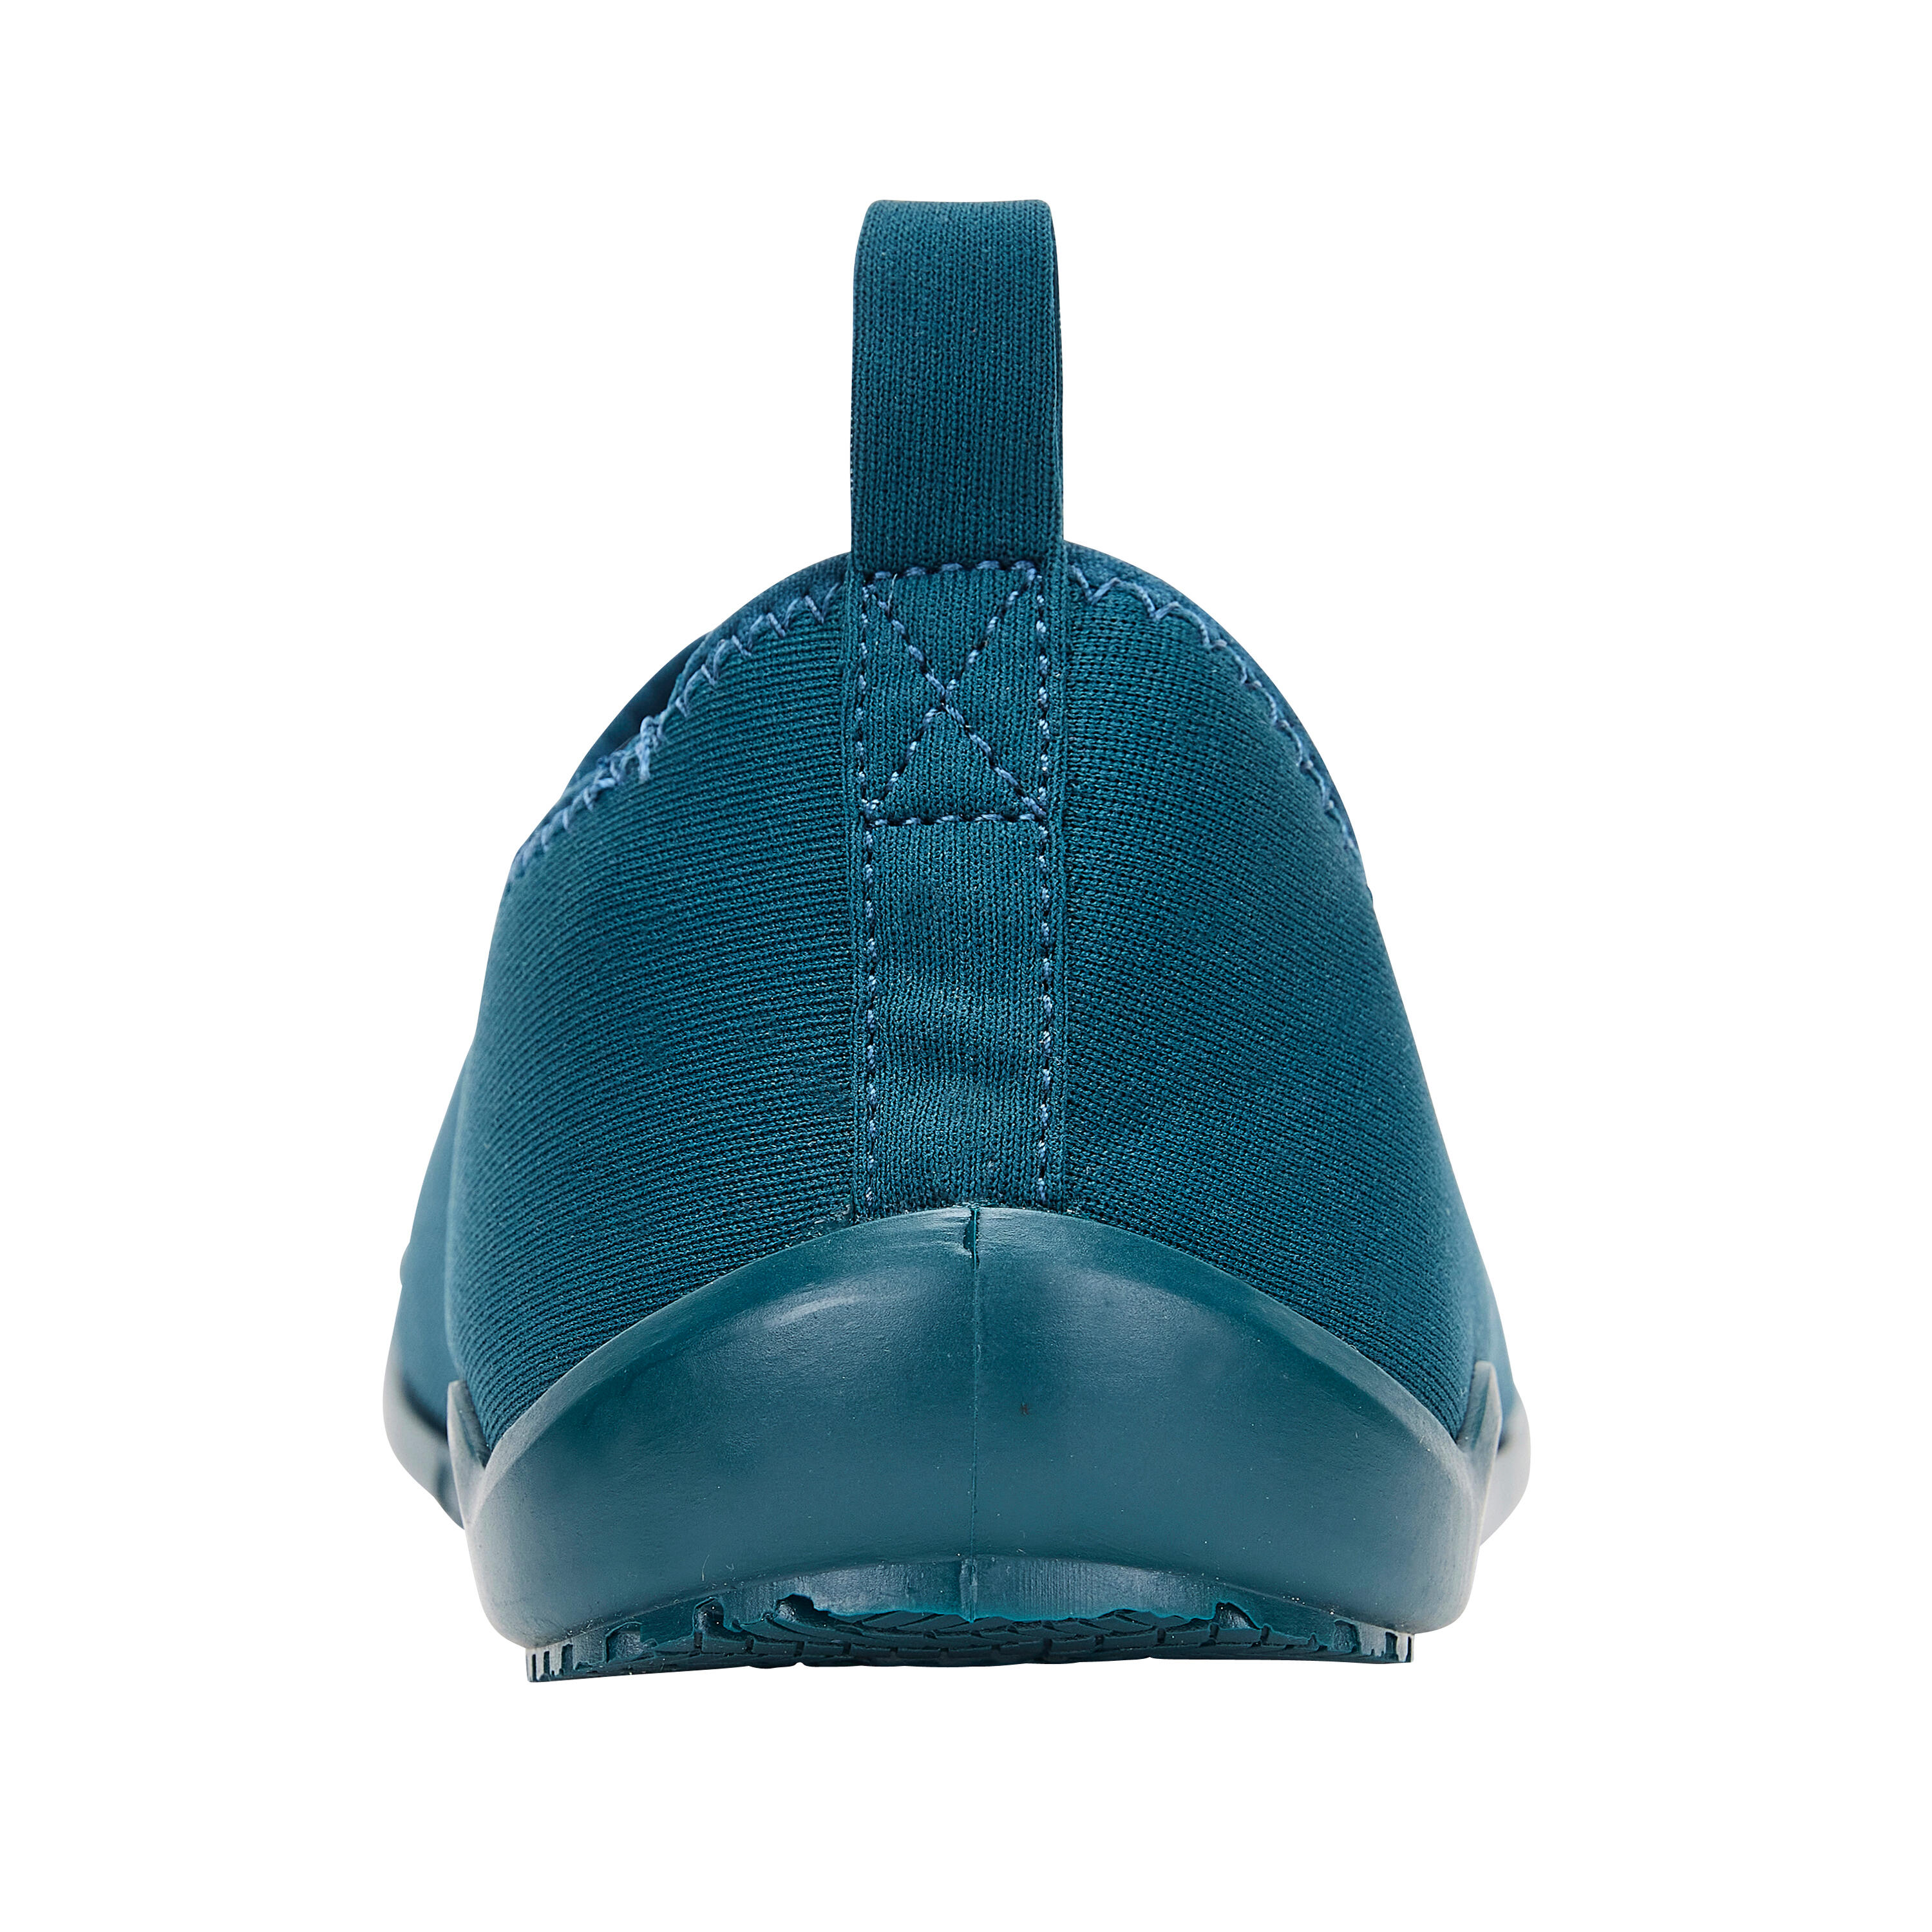 Aquafit Shoes Gymshoe - Petrol Blue 6/7